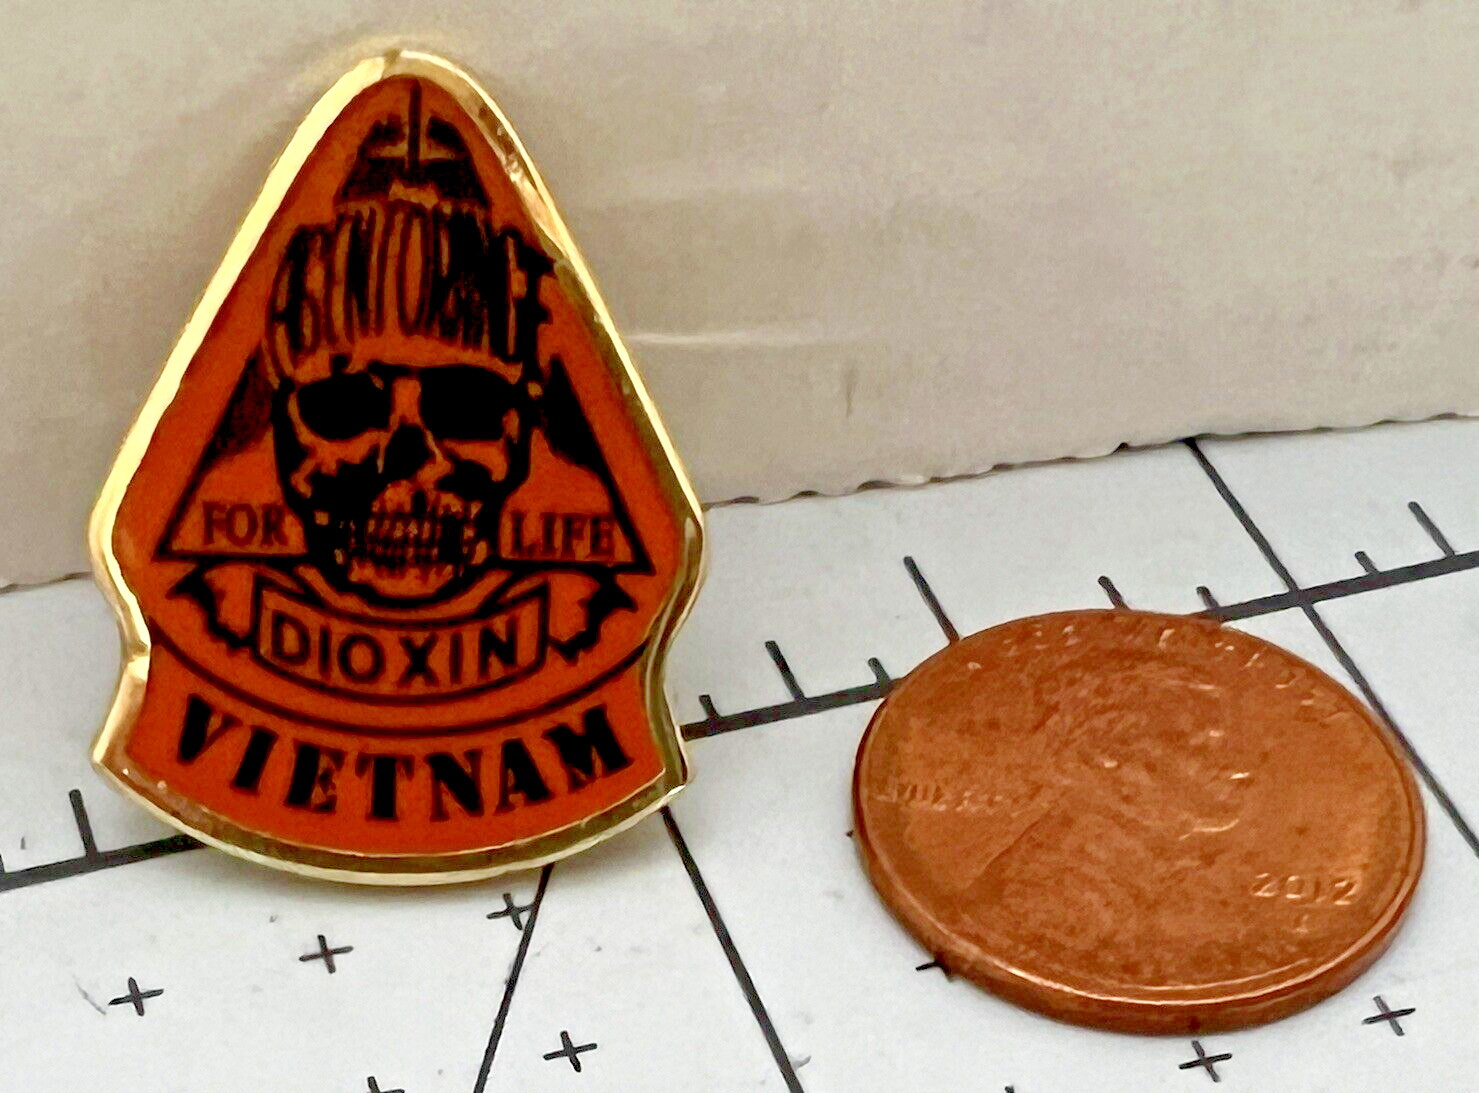 Vietnam Veteran Agent Orange Hat Pin / Lapel Pin, Dioxin for Life